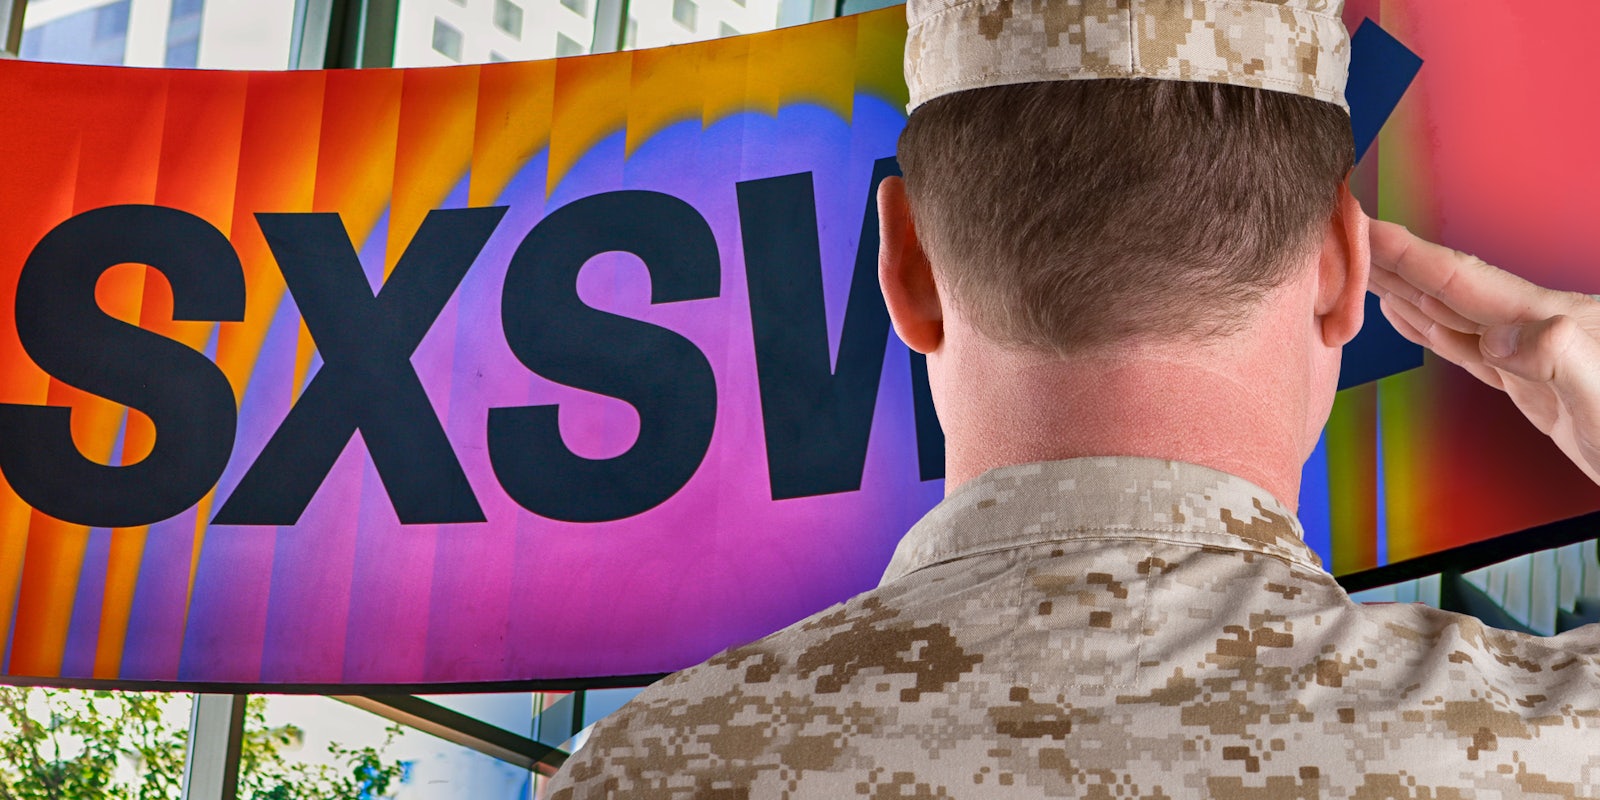 US Soldier saluting SXSW